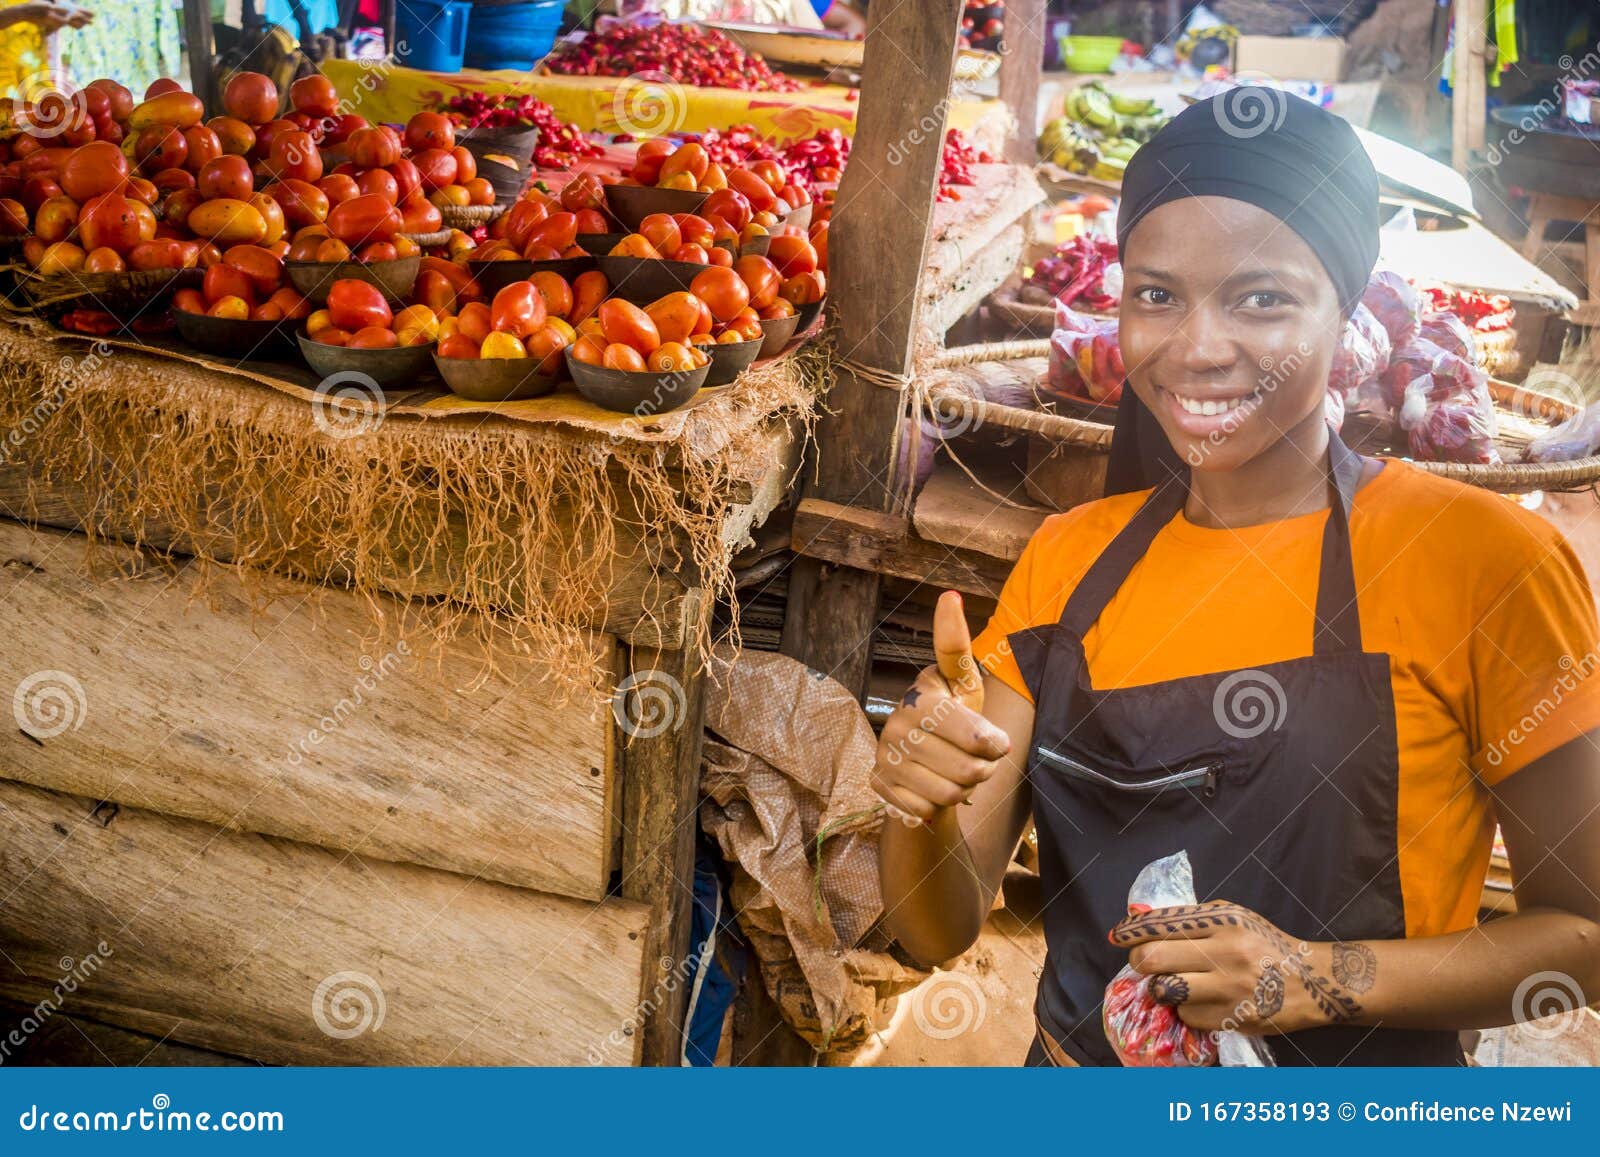 woman at market in nigeria